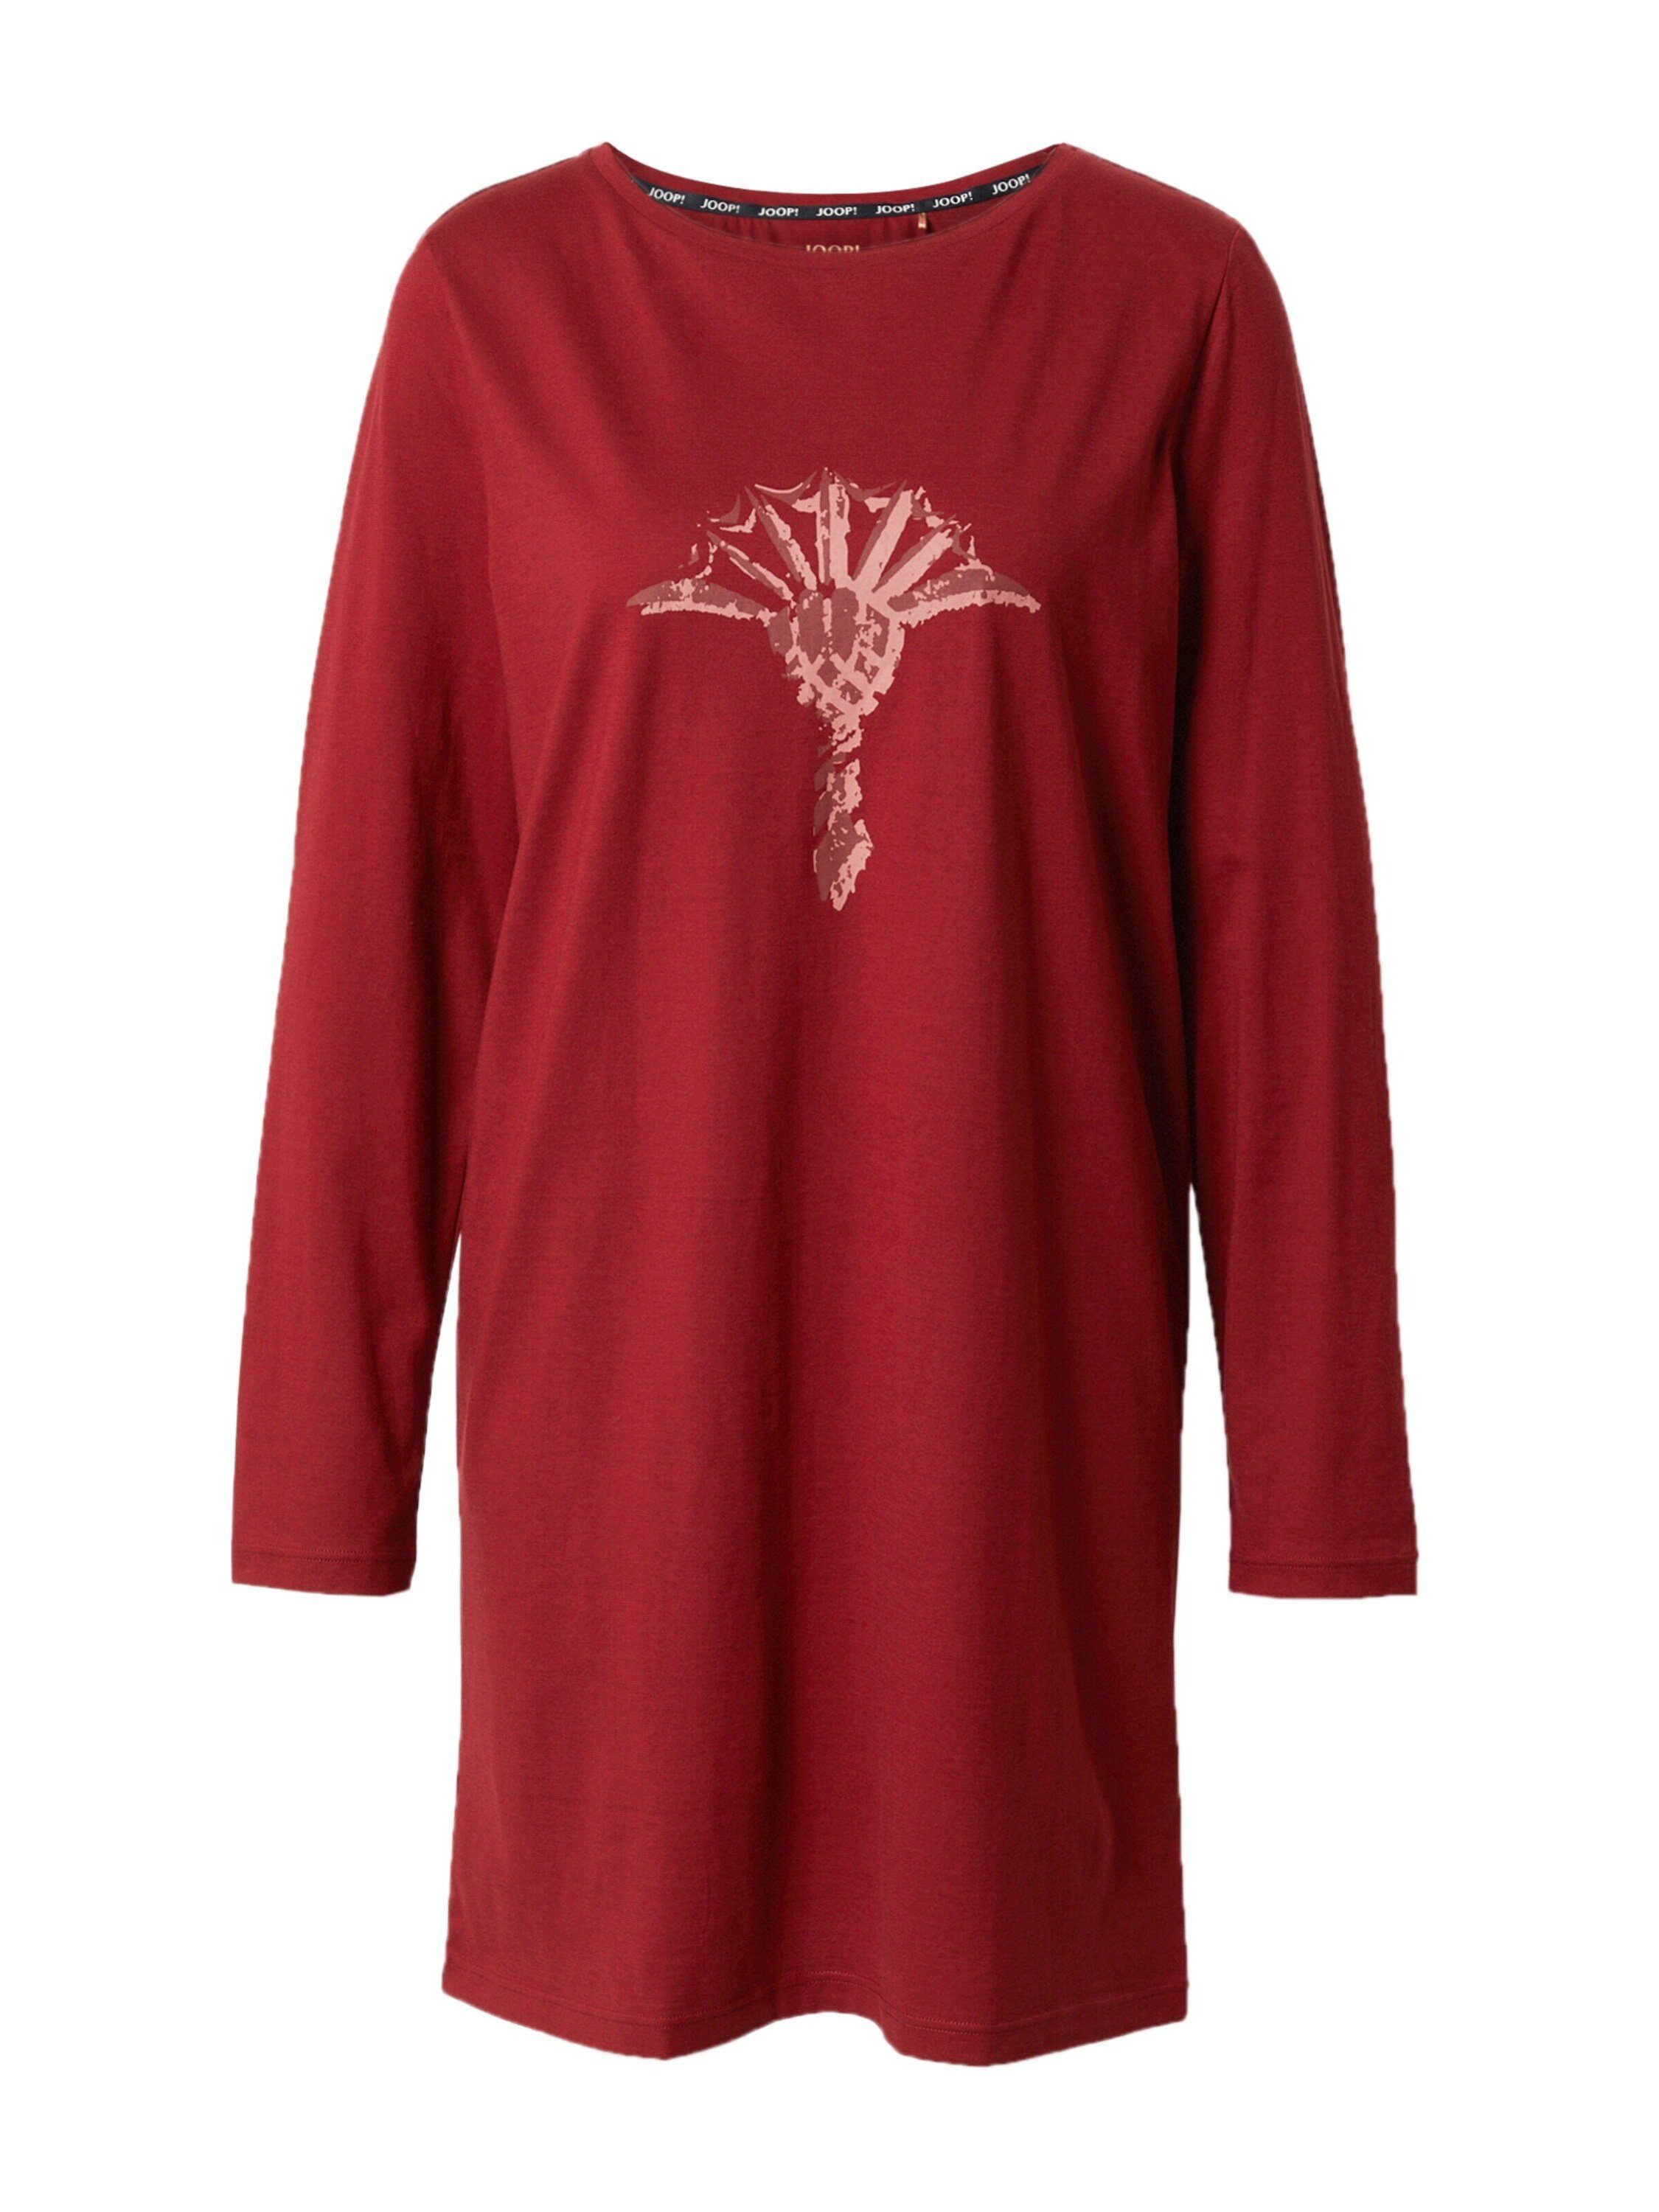 Material: Kimono, Plain/ohne Details 100% Rot Baumwolle, Joop!